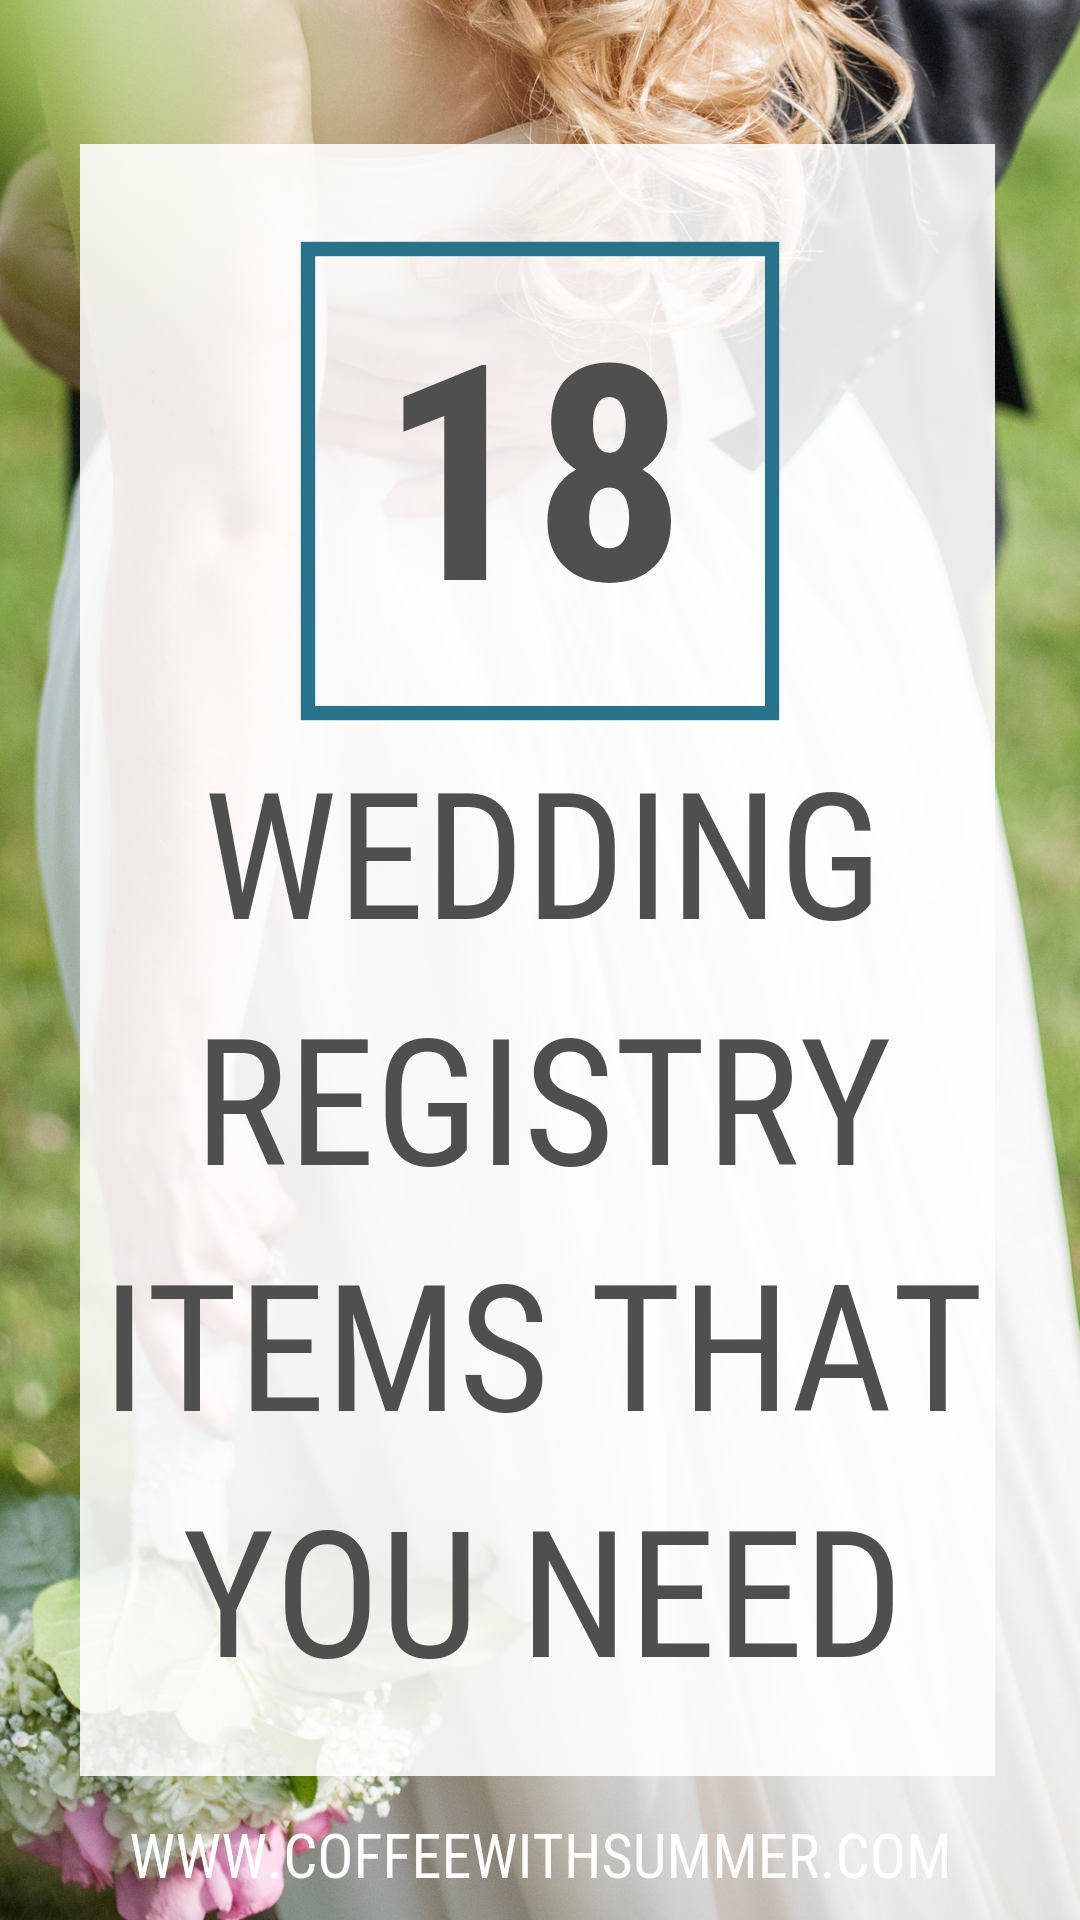 https://www.coffeewithsummer.com/wp-content/uploads/2019/05/wedding-registry-essentials-1.png